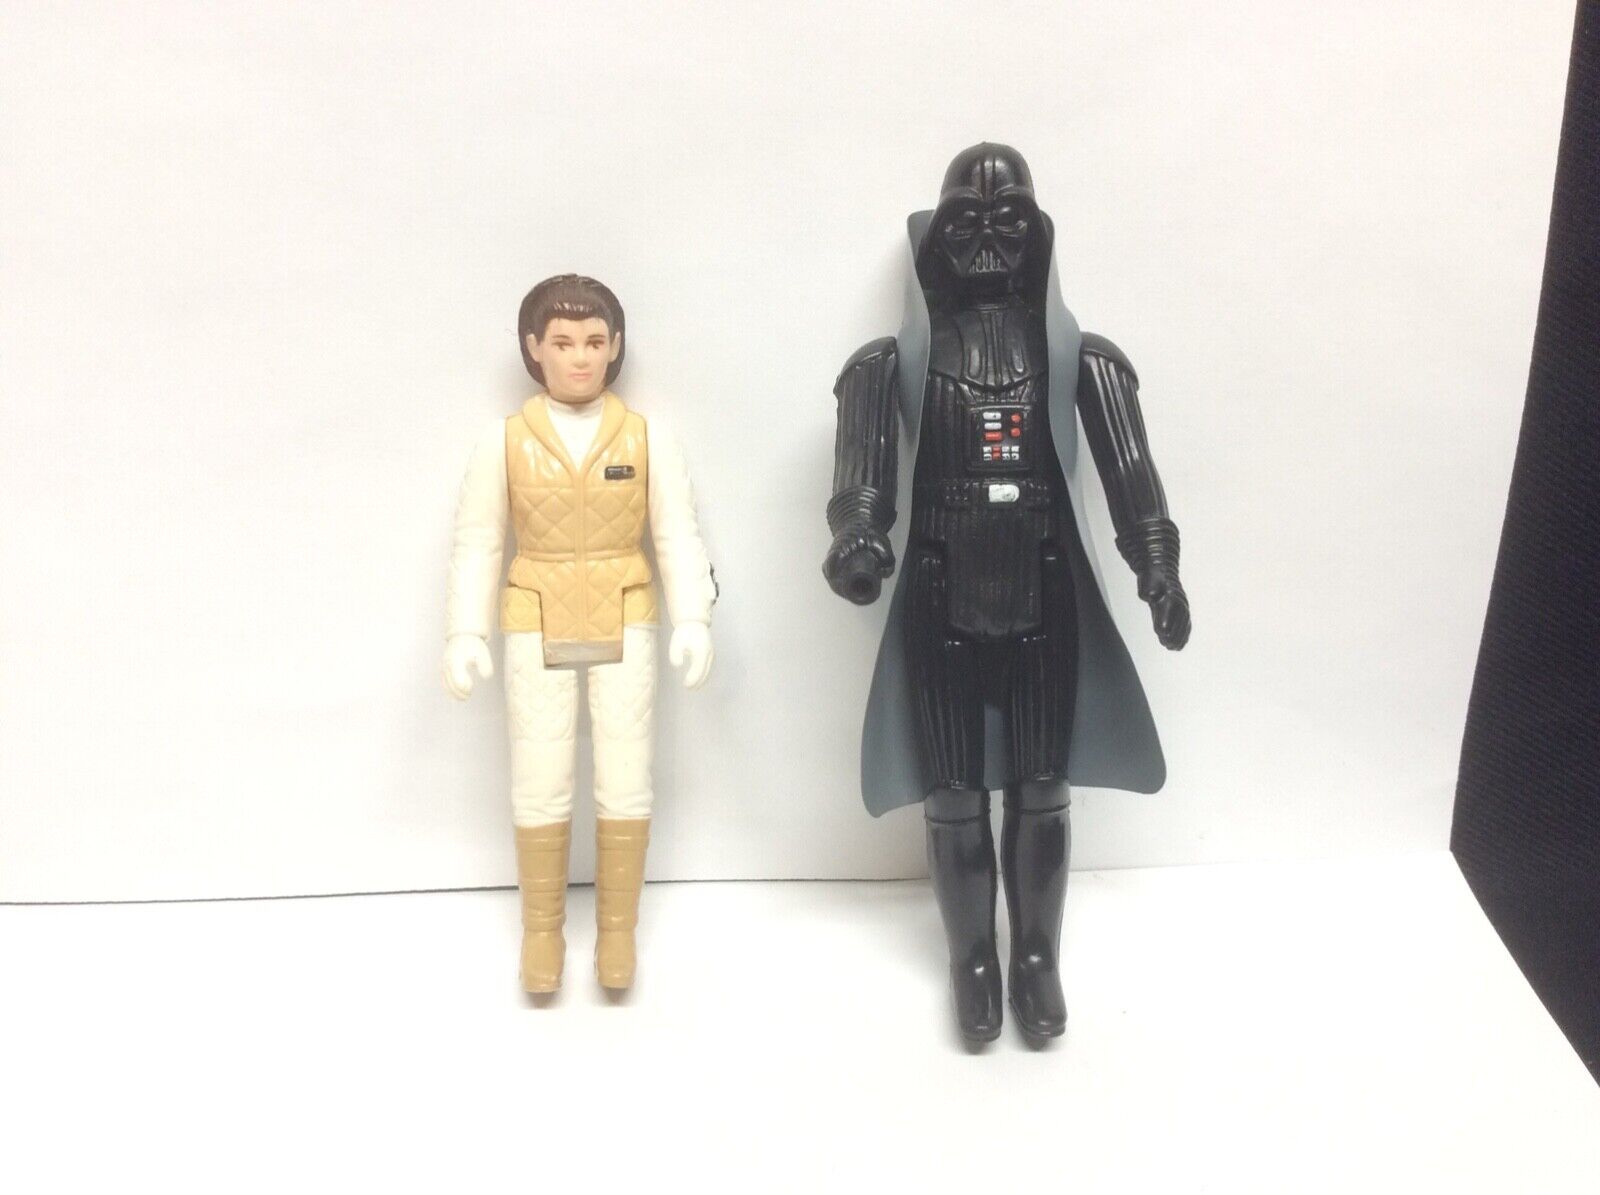 2 Star Wars Action Figure Darth Vader 1977 & Princess Leia 1980